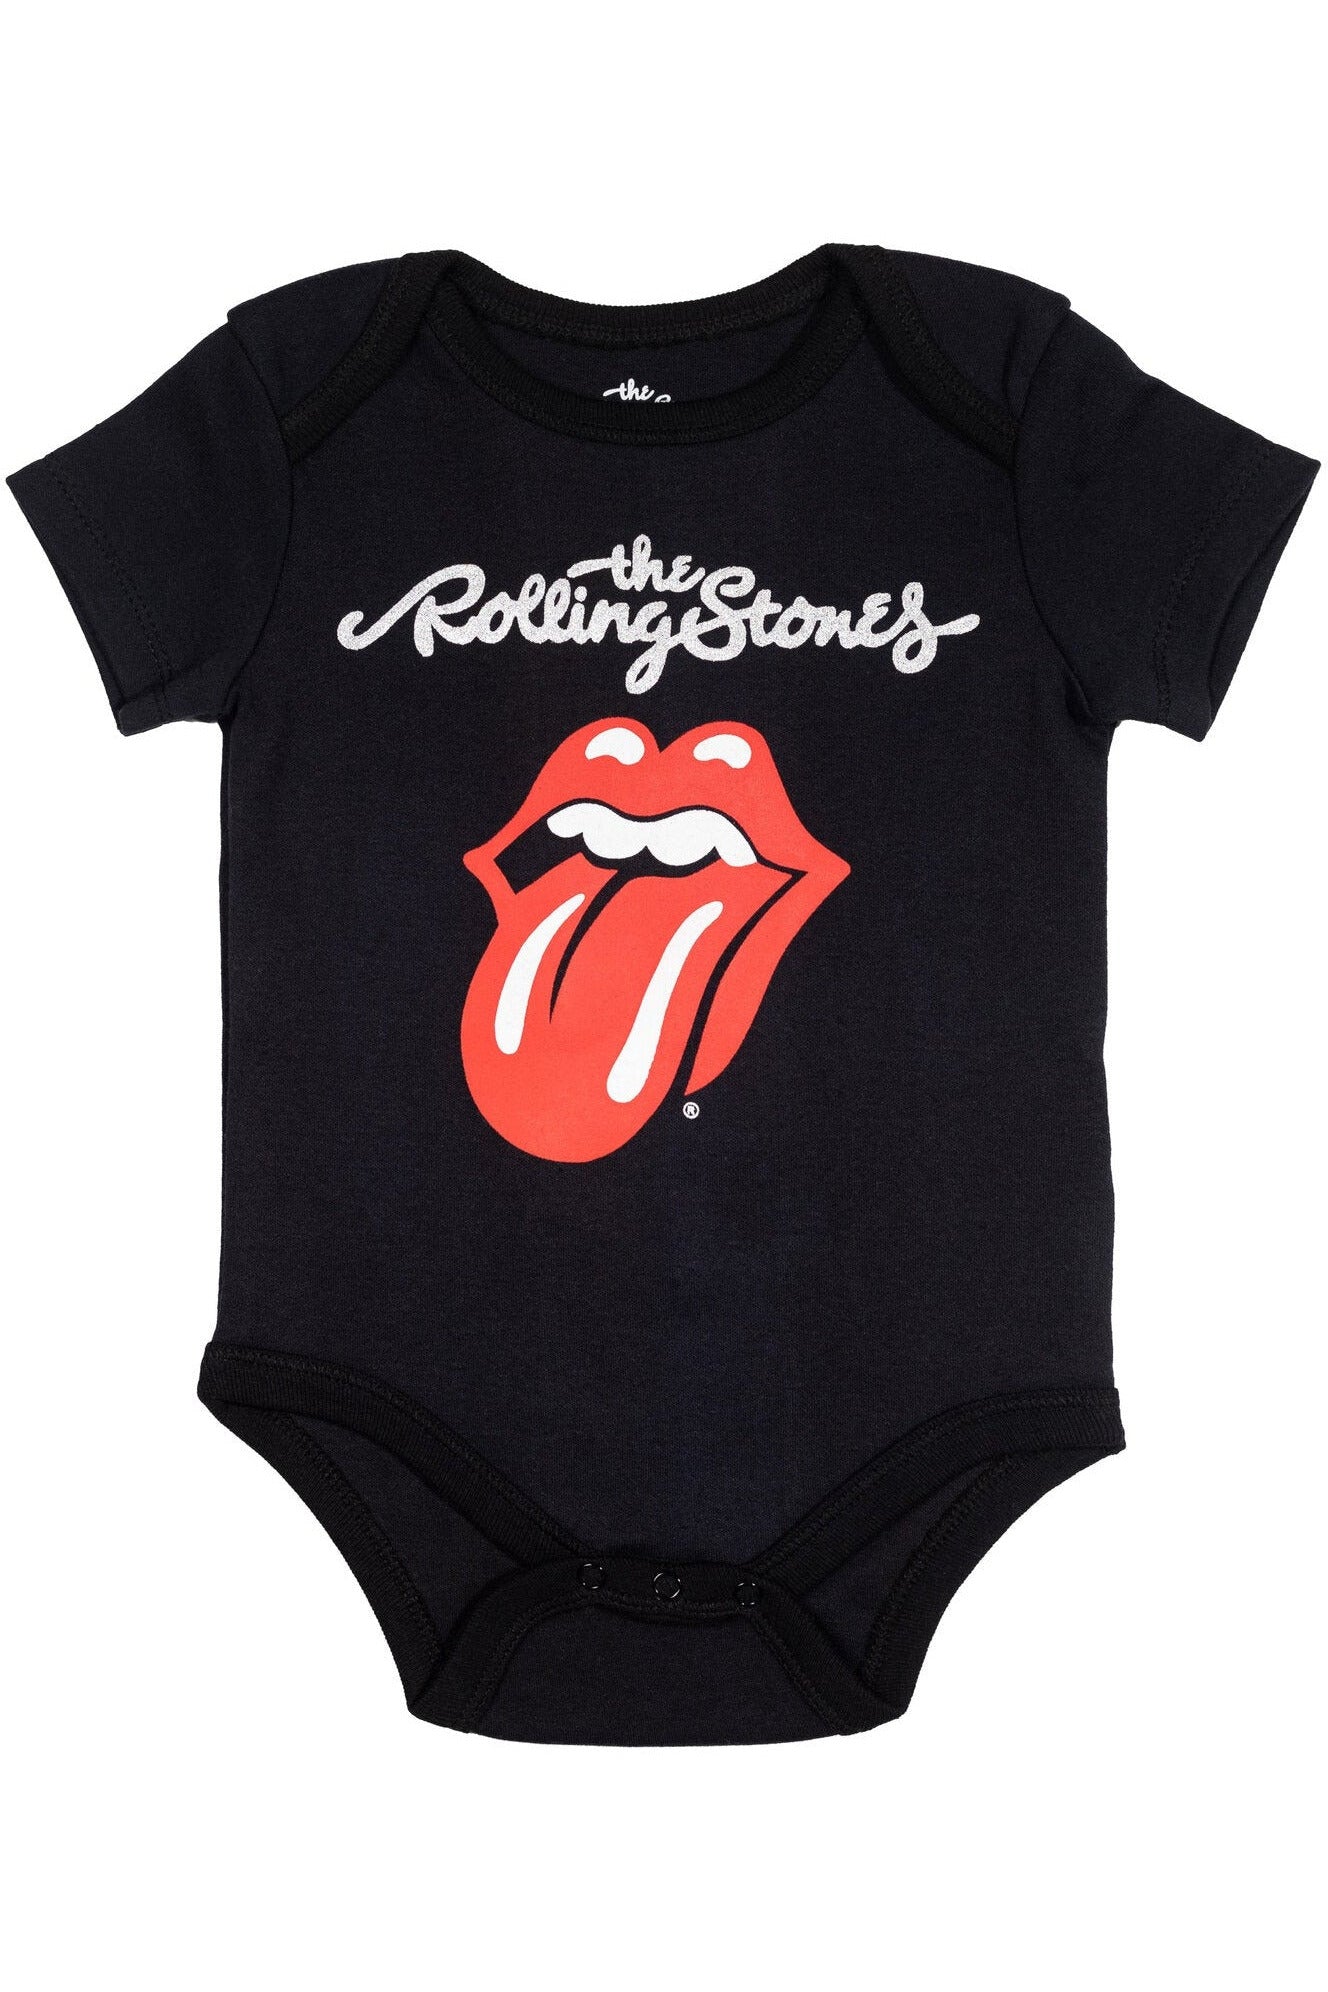 Rolling Stones Rolling Stones Rock Band Short Sleeve Bodysuit